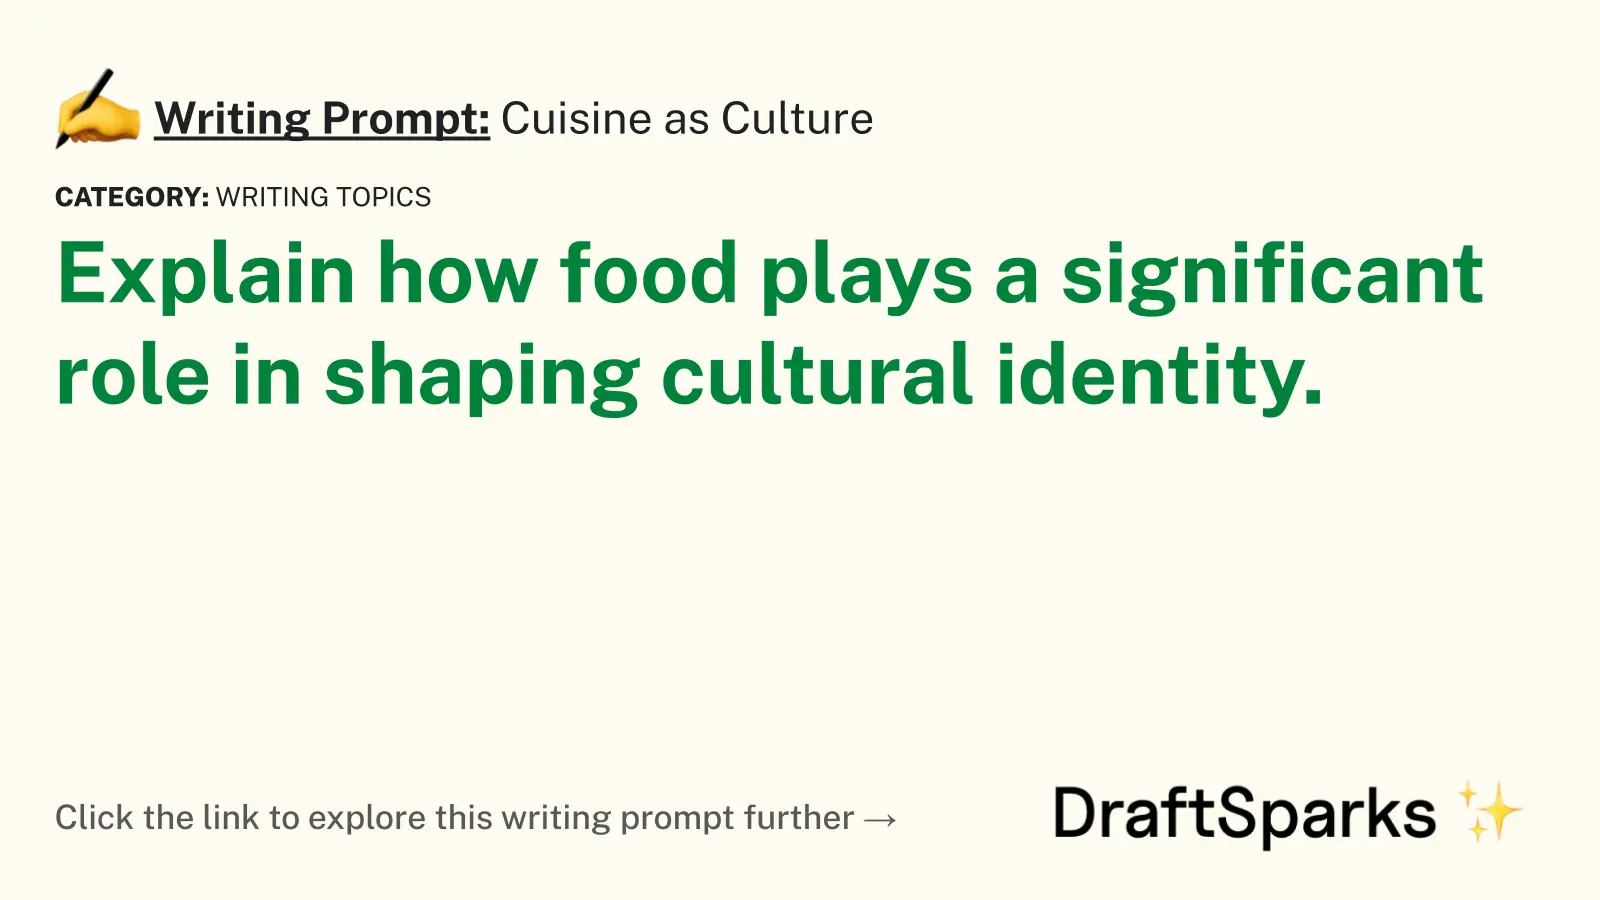 Cuisine as Culture